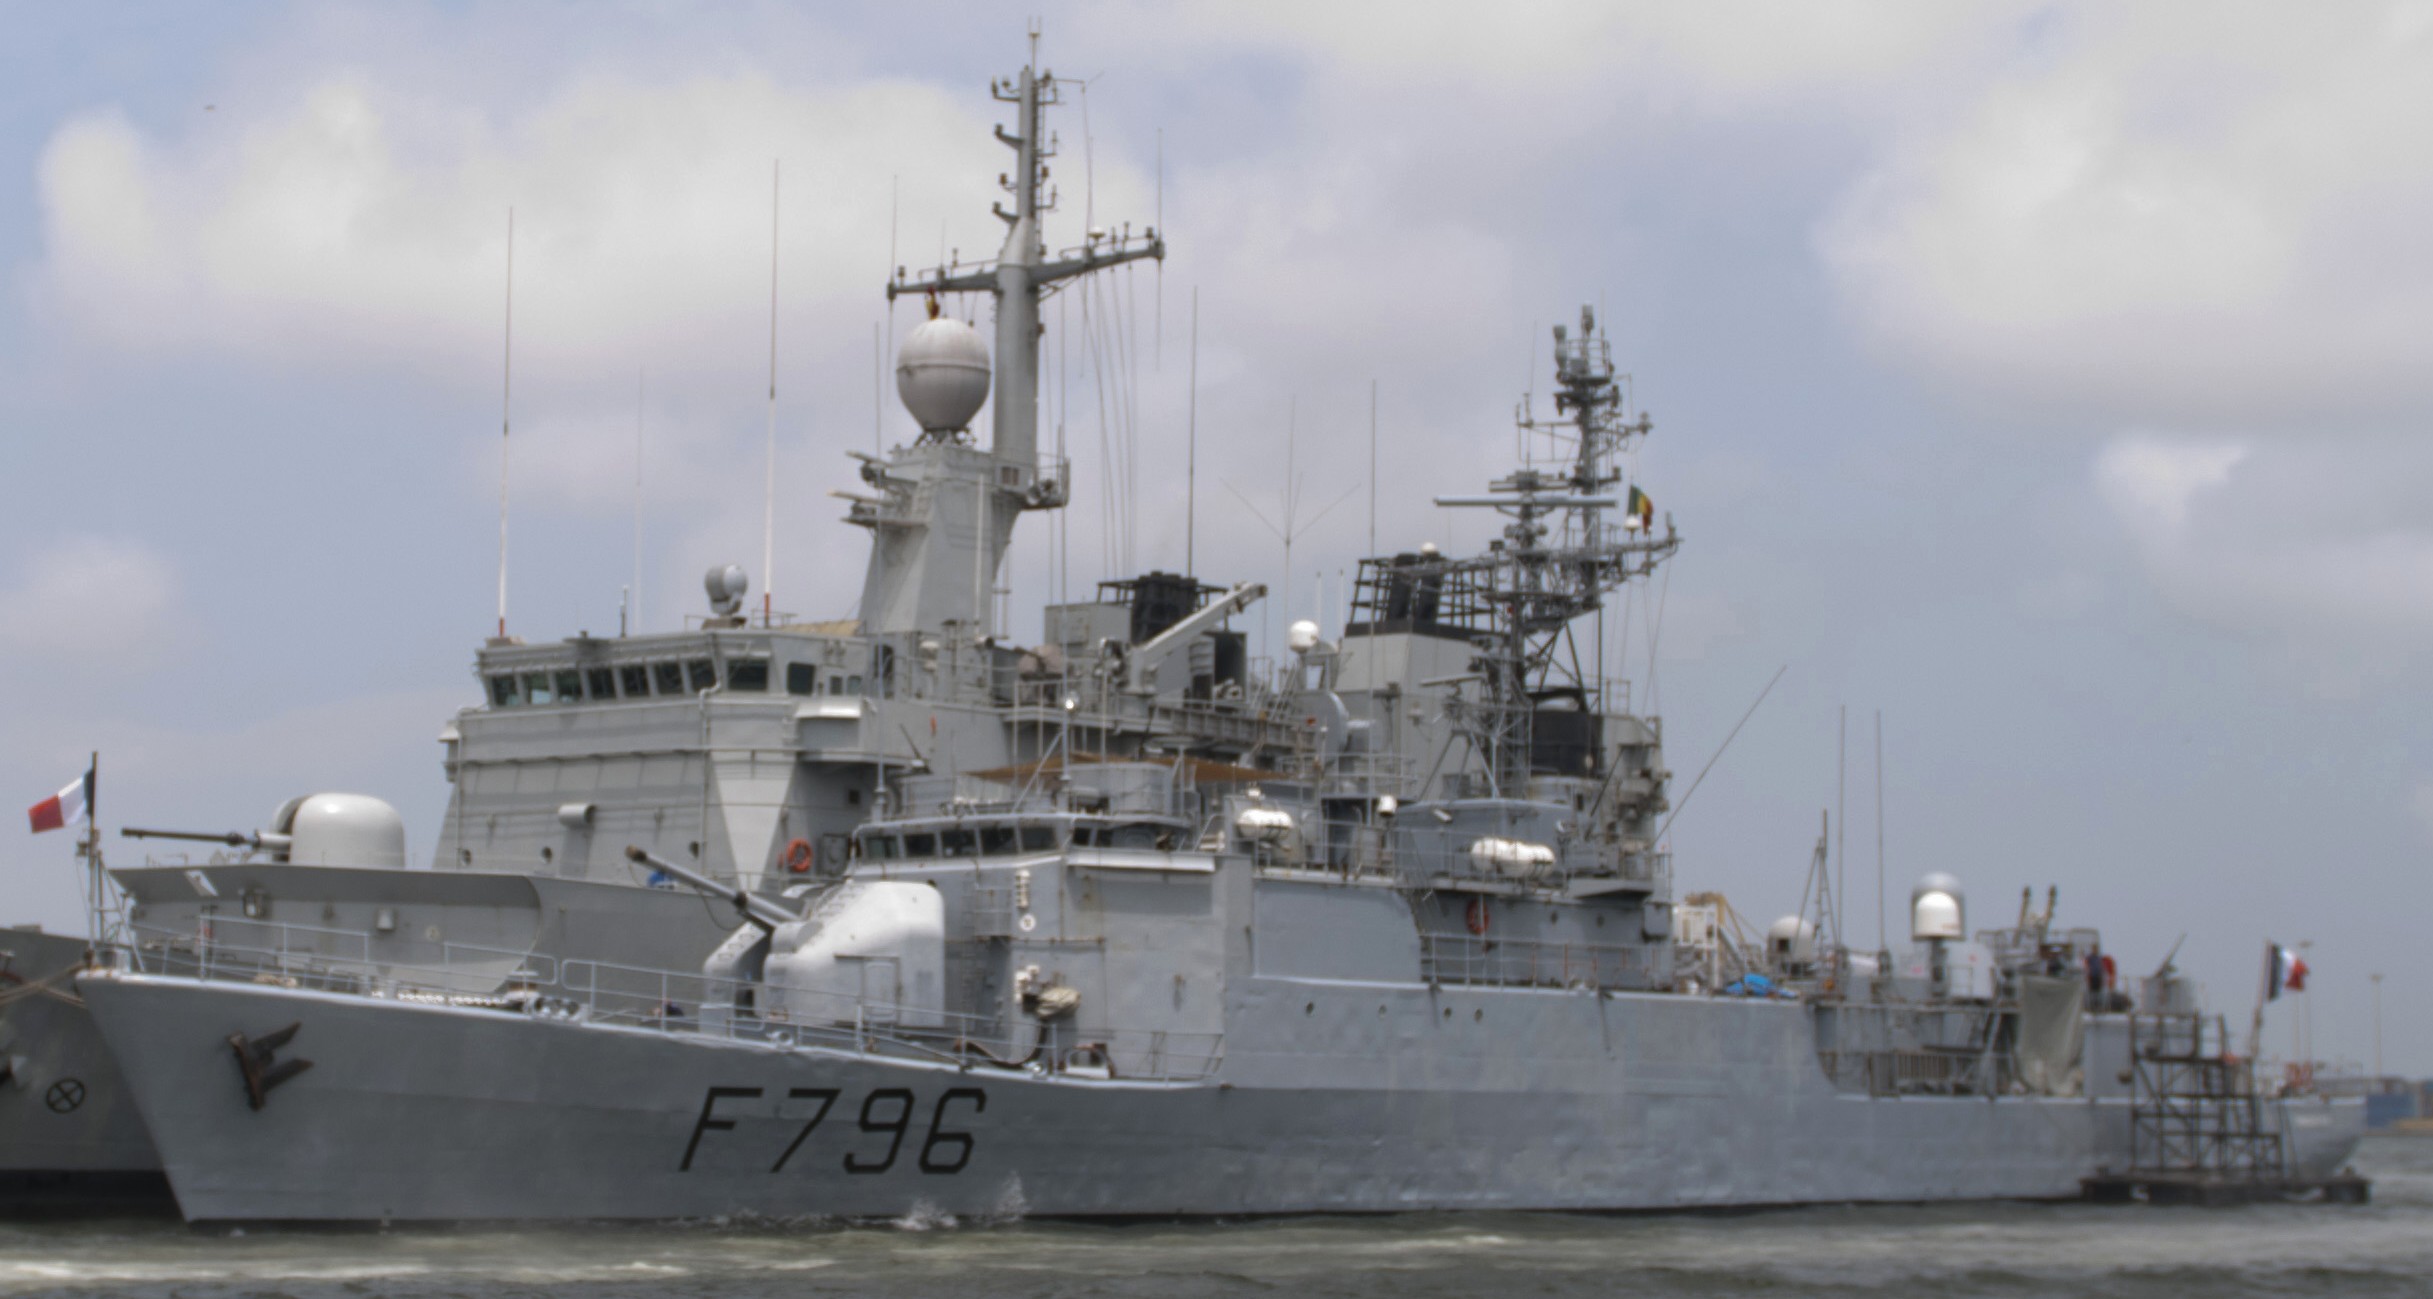 f-796 fs commandant birot d'estienne d'orves class corvette type a69 aviso french navy marine nationale 07